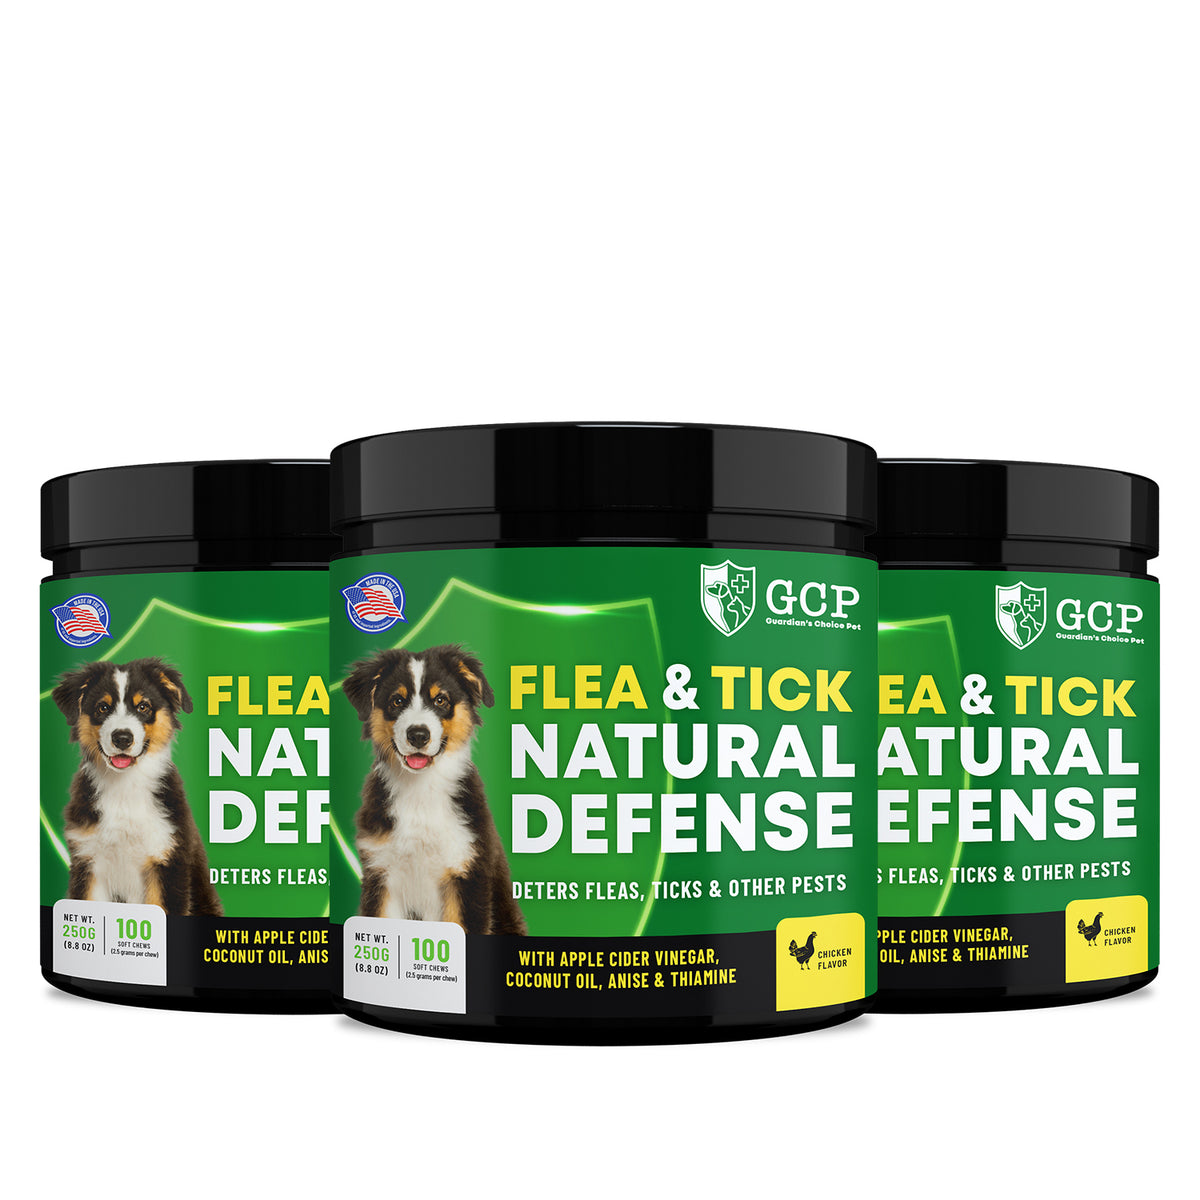 GCP Flea &amp; Tick Natural Defense for Dogs - 100 Soft Chews